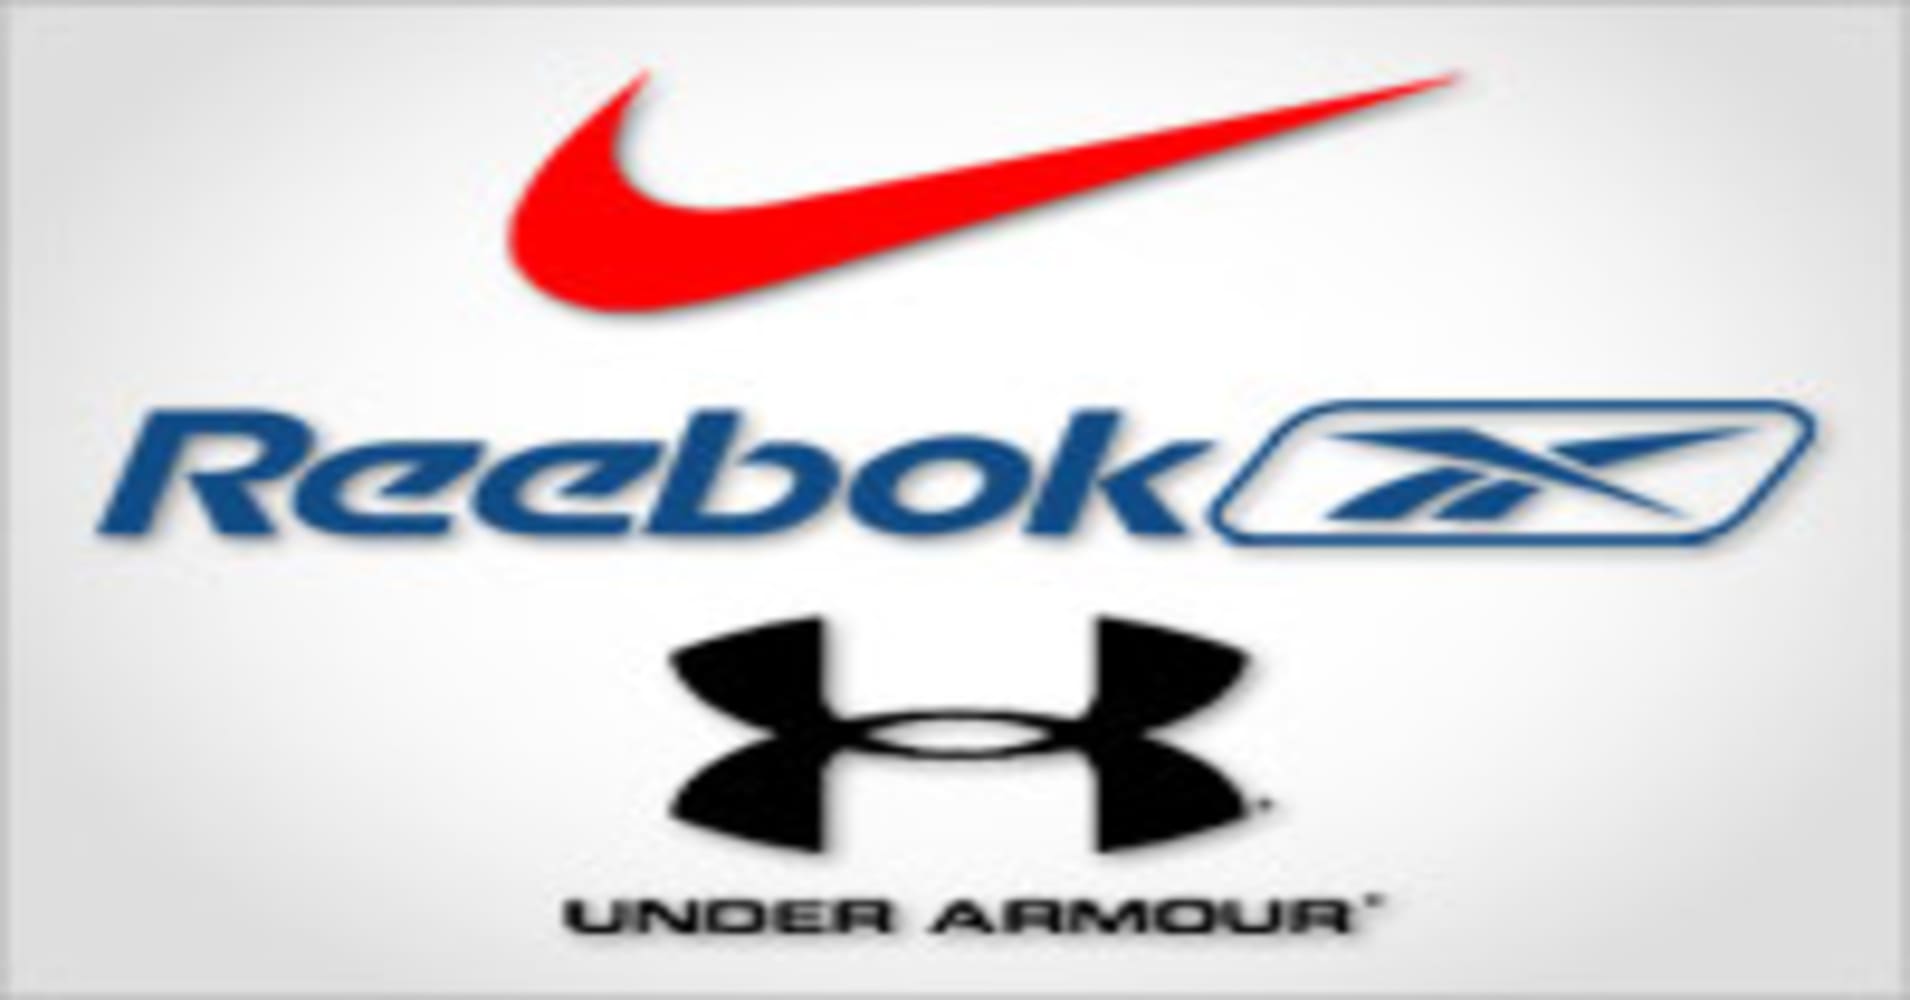 Рибок или найк. Найк против рибок. Reebok vs Nike. Under Armour logo.